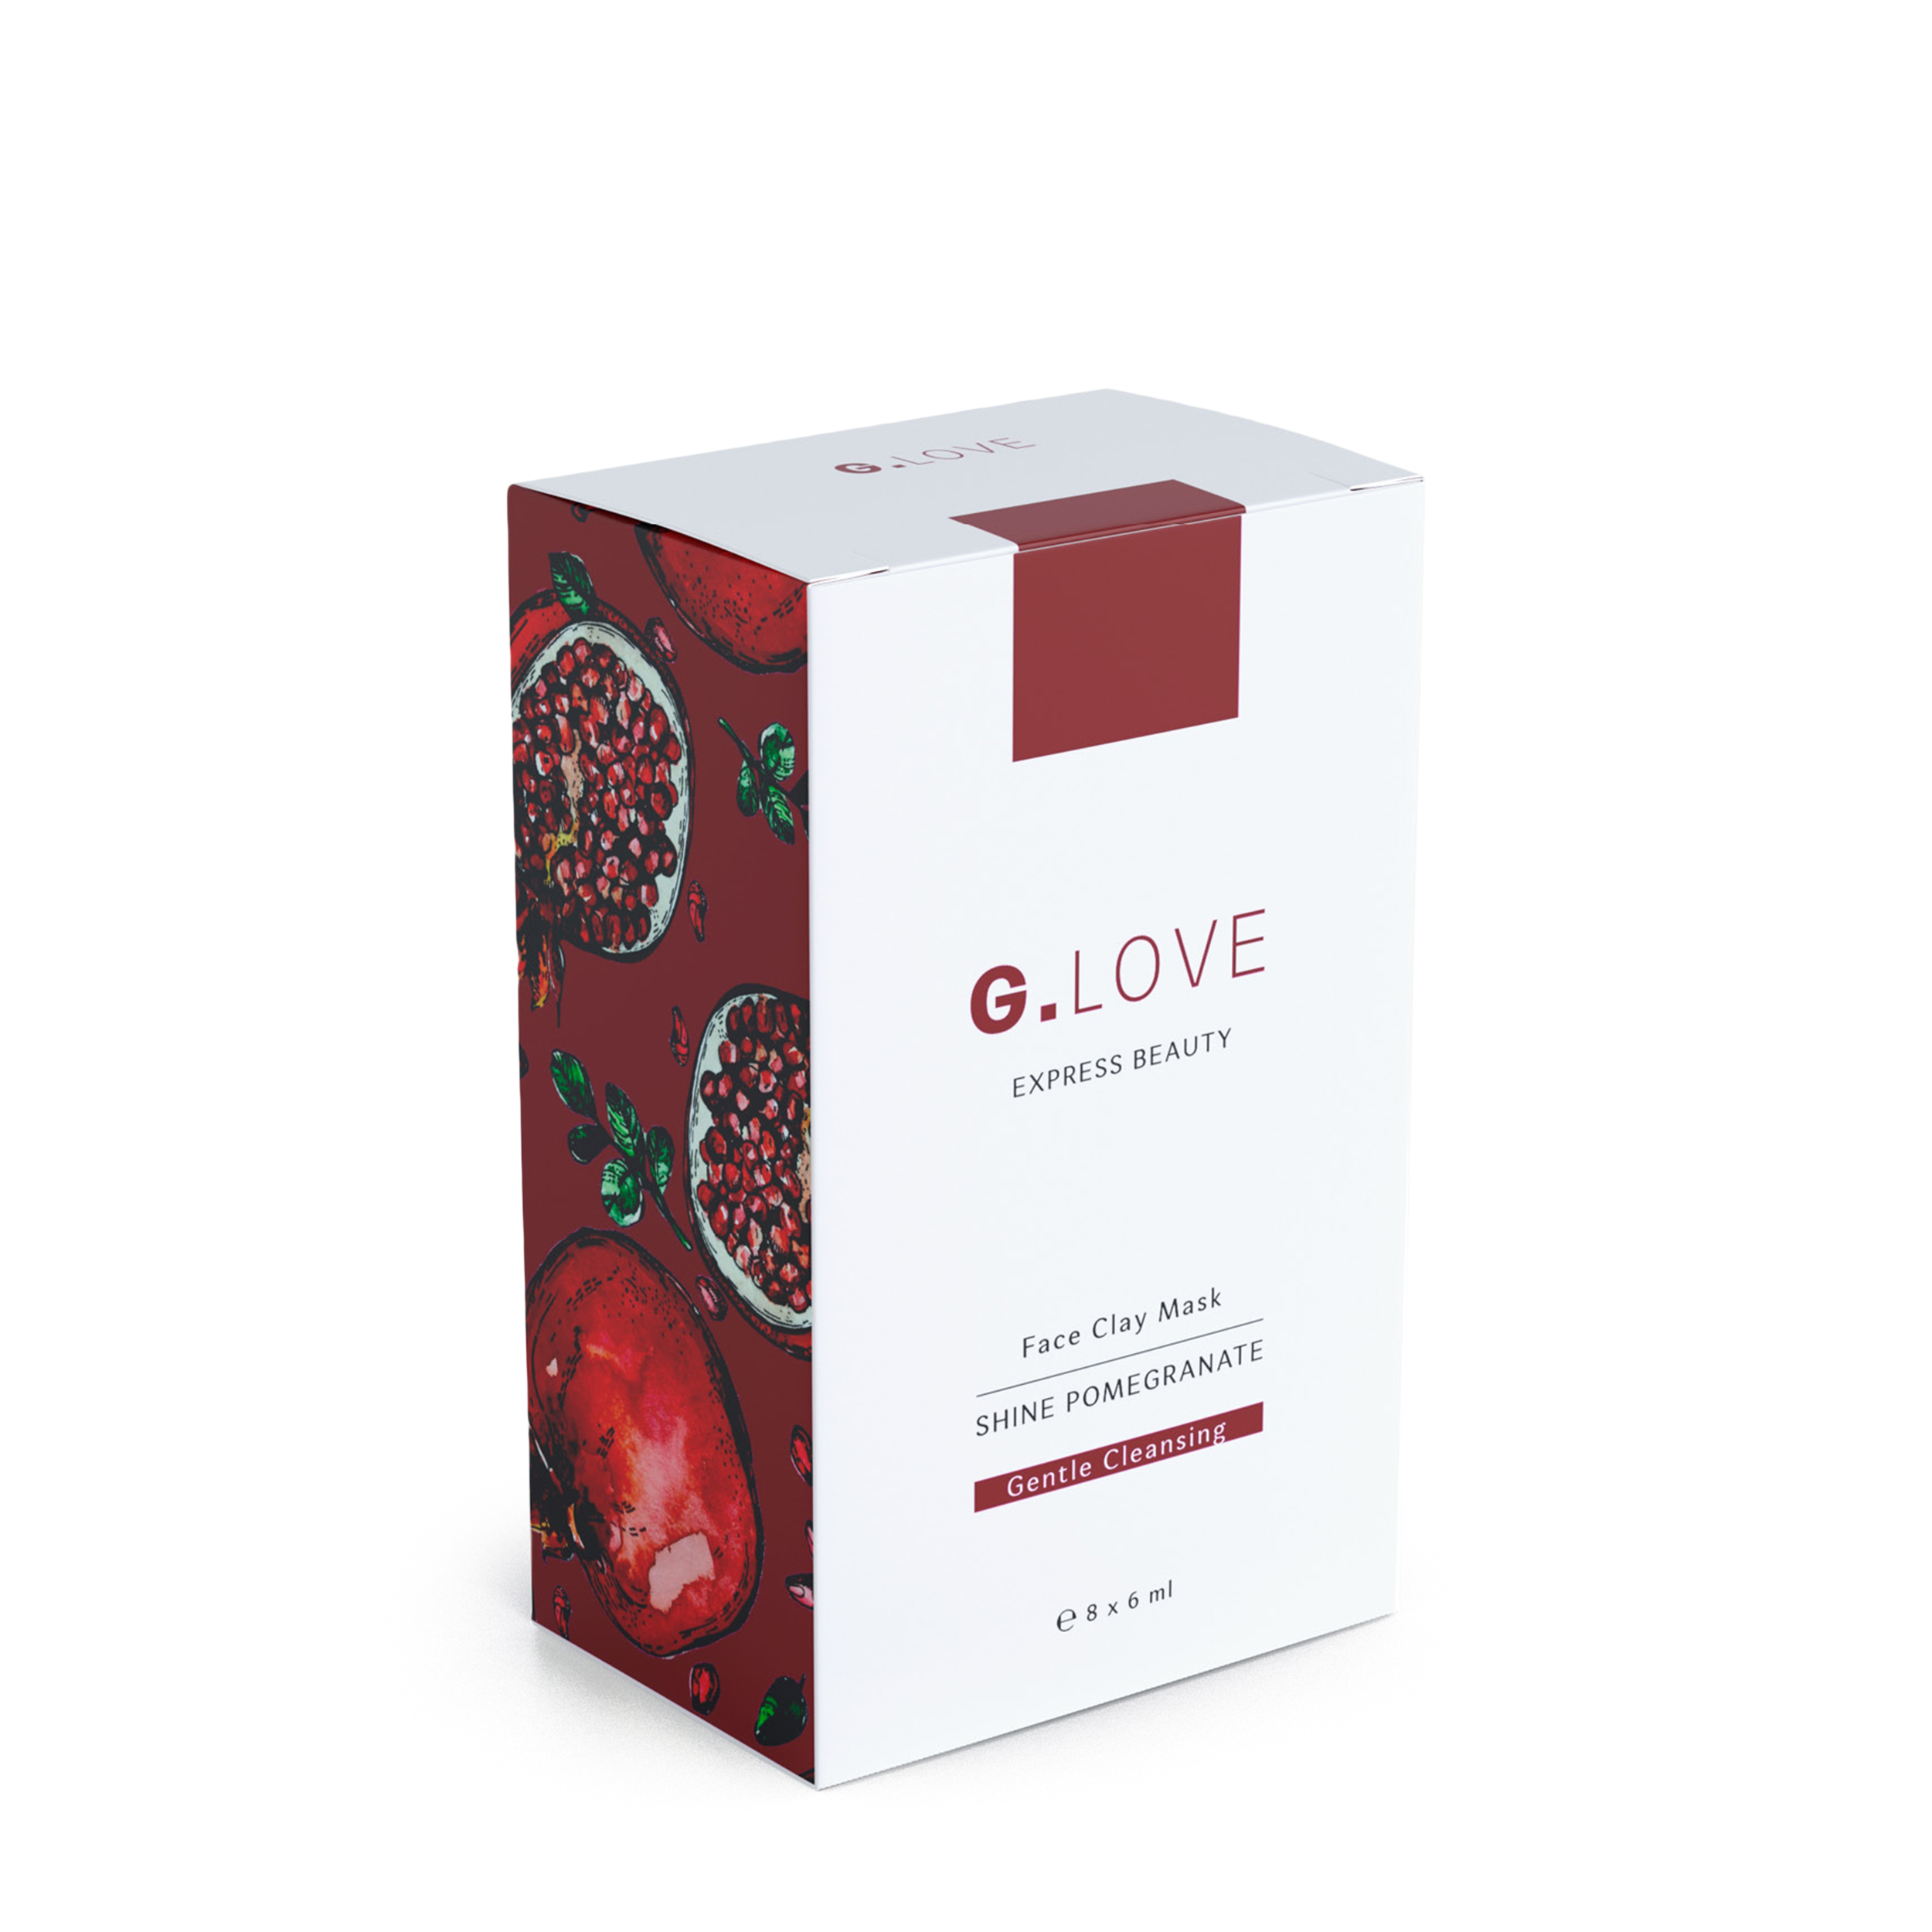 G.LOVE G.LOVE Глиняная маска для лица Shine Pomegranate 8x6 мл от Foambox